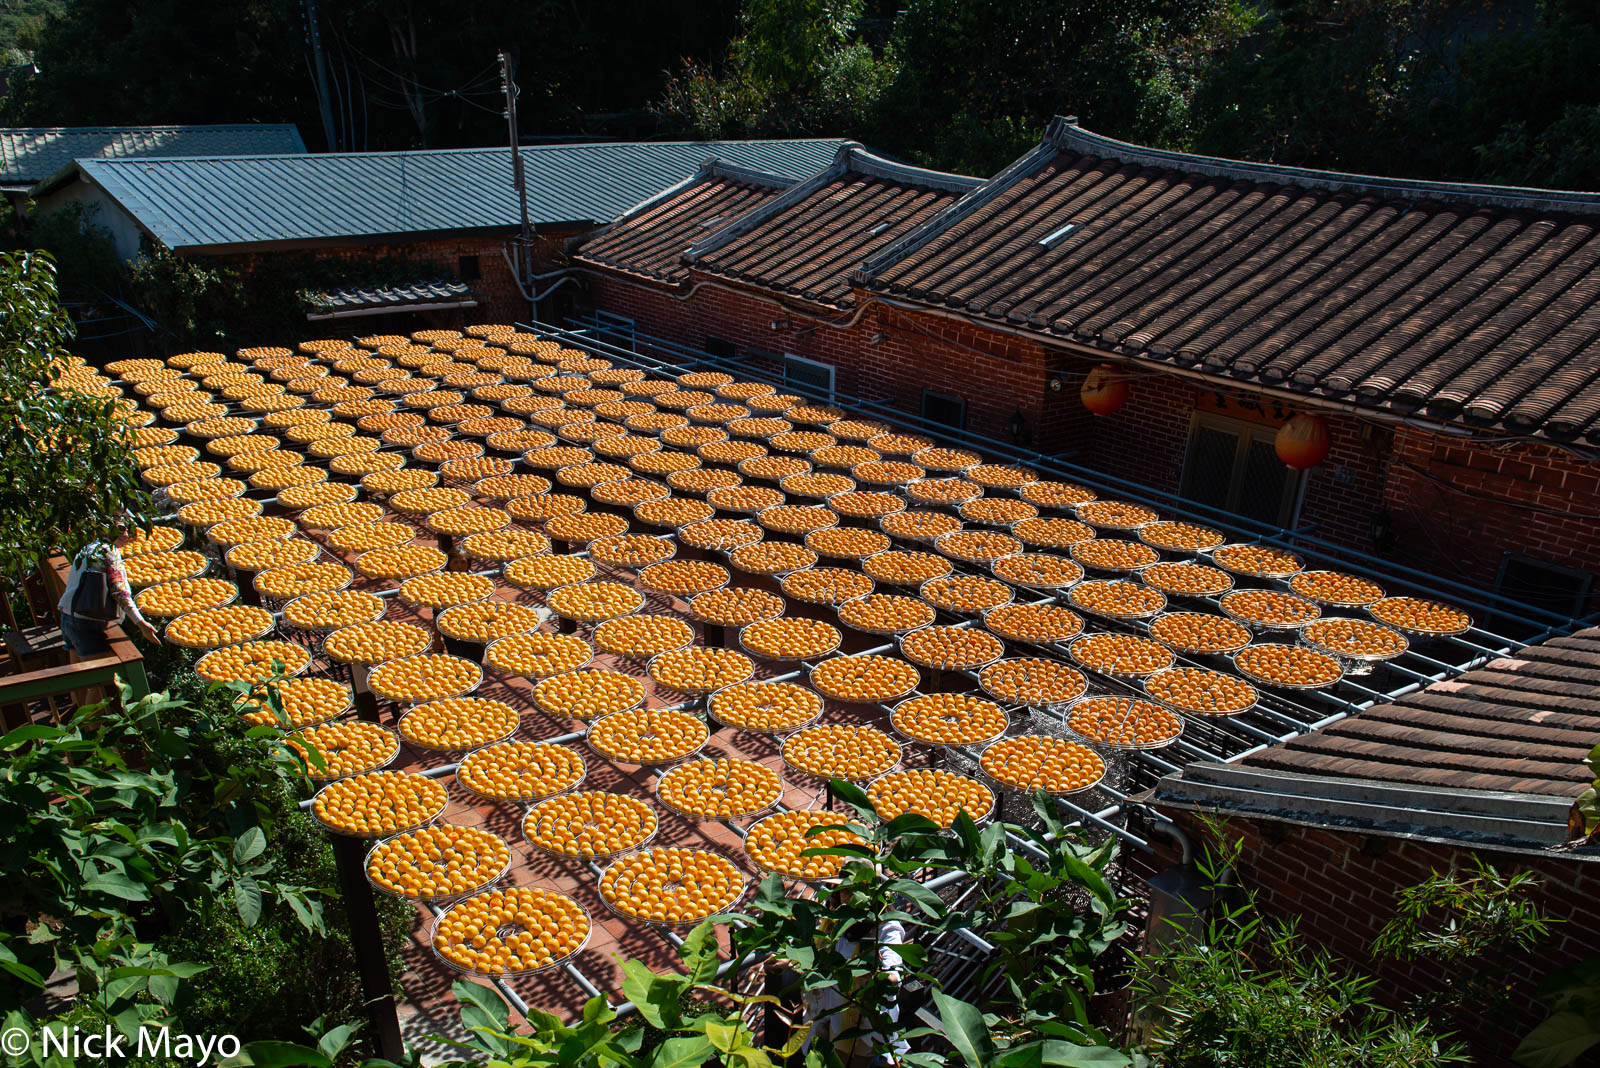 Trays of persimmons drying in a farmhouse courtyard near Xinpu in Hsinchu County.